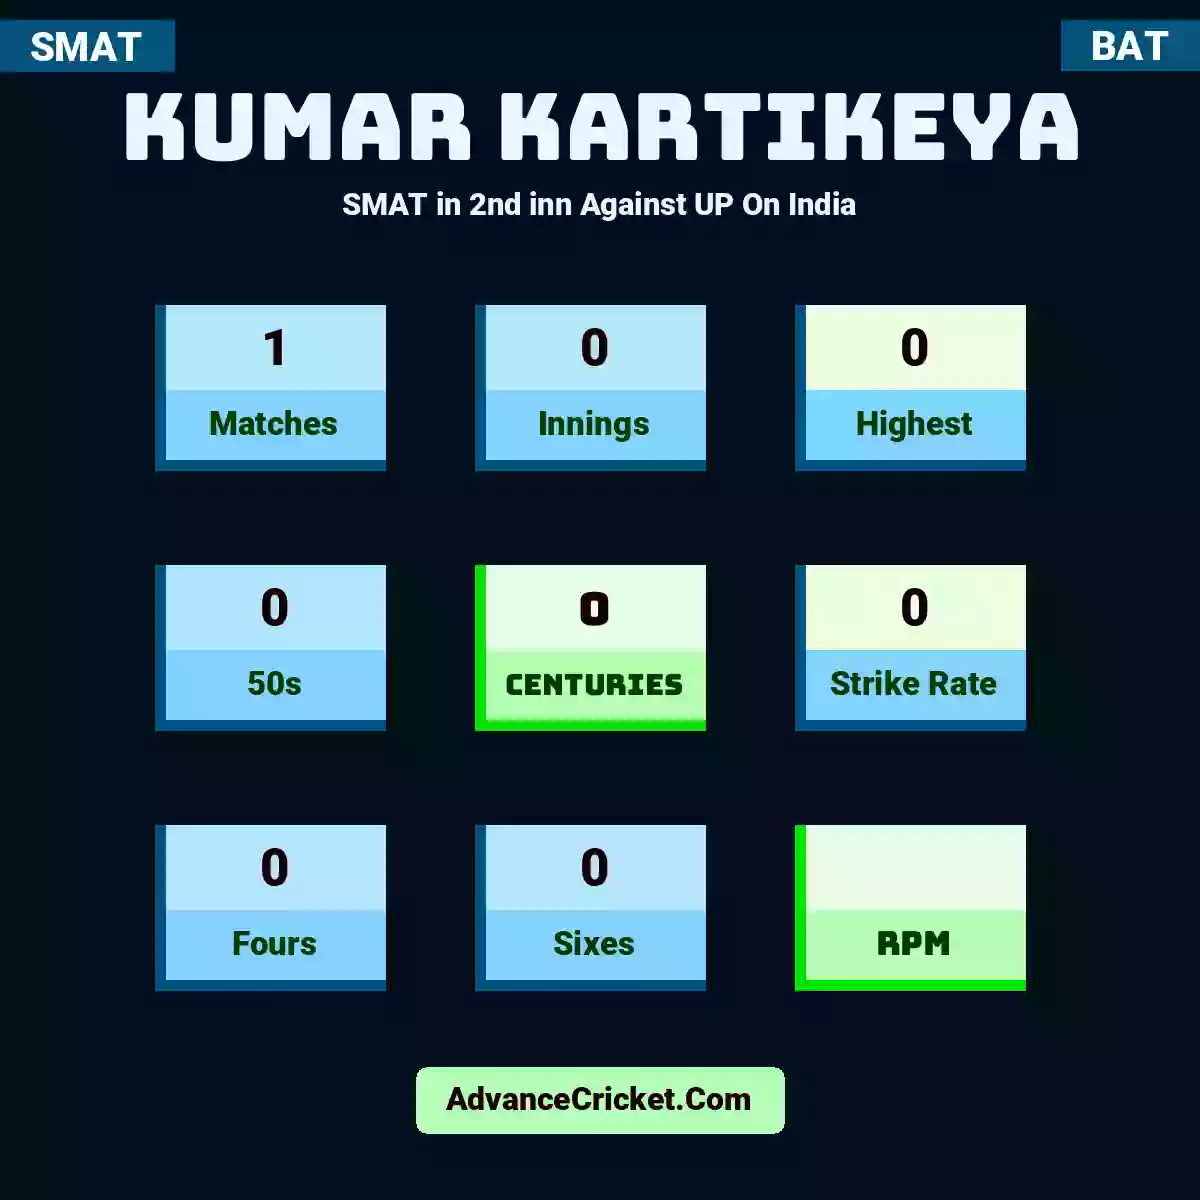 Kumar Kartikeya SMAT  in 2nd inn Against UP On India, Kumar Kartikeya played 1 matches, scored 0 runs as highest, 0 half-centuries, and 0 centuries, with a strike rate of 0. K.Kartikeya hit 0 fours and 0 sixes.